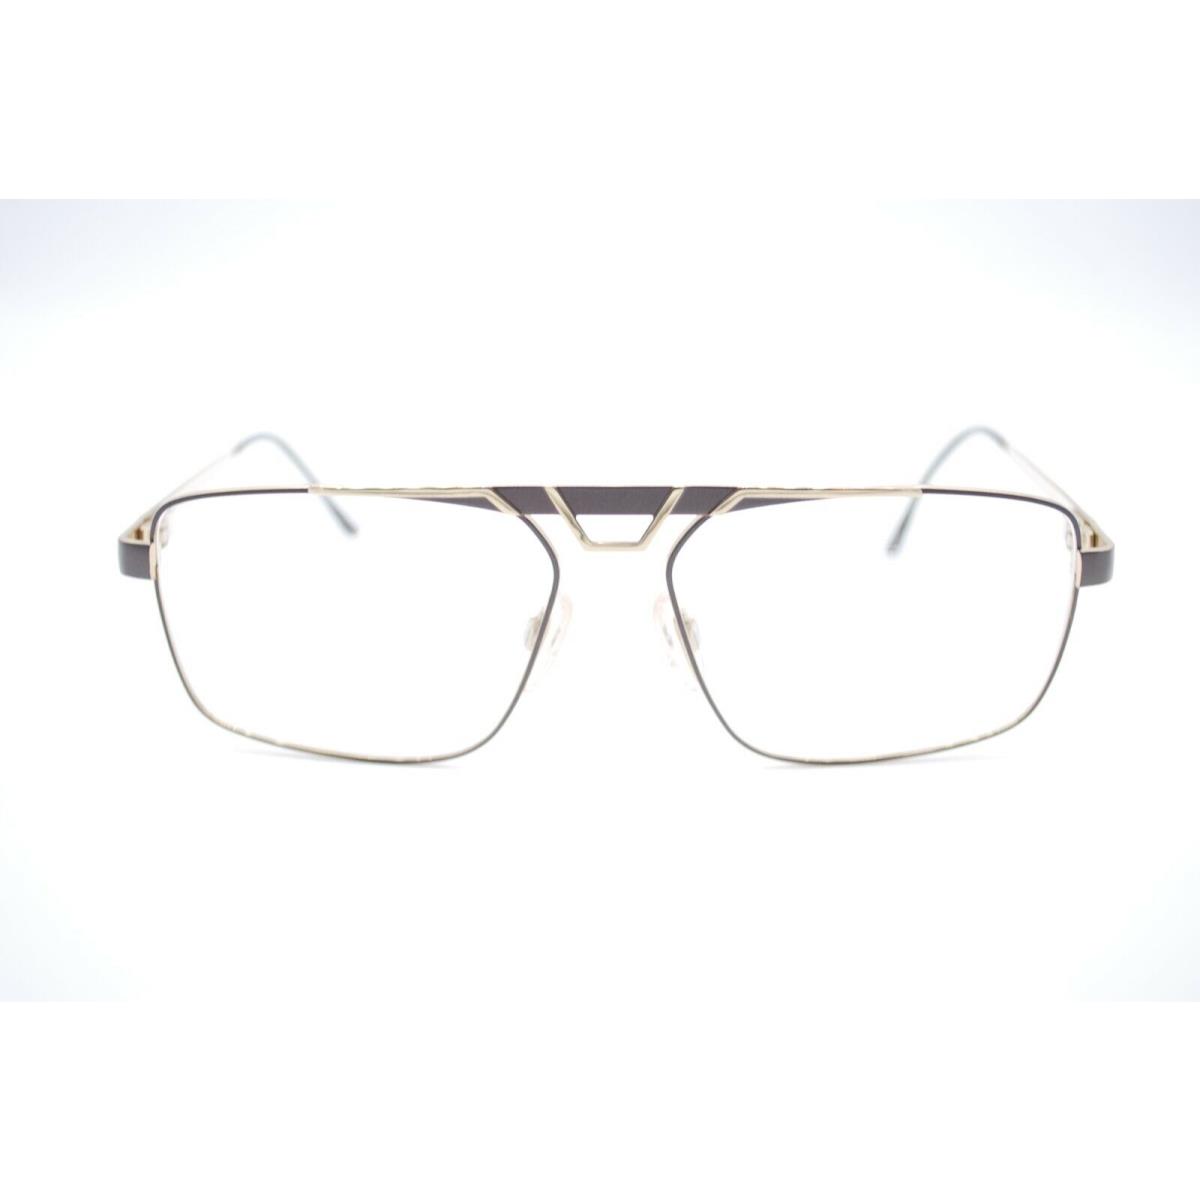 Cazal eyeglasses  - GOLD AND BROWN Frame 1